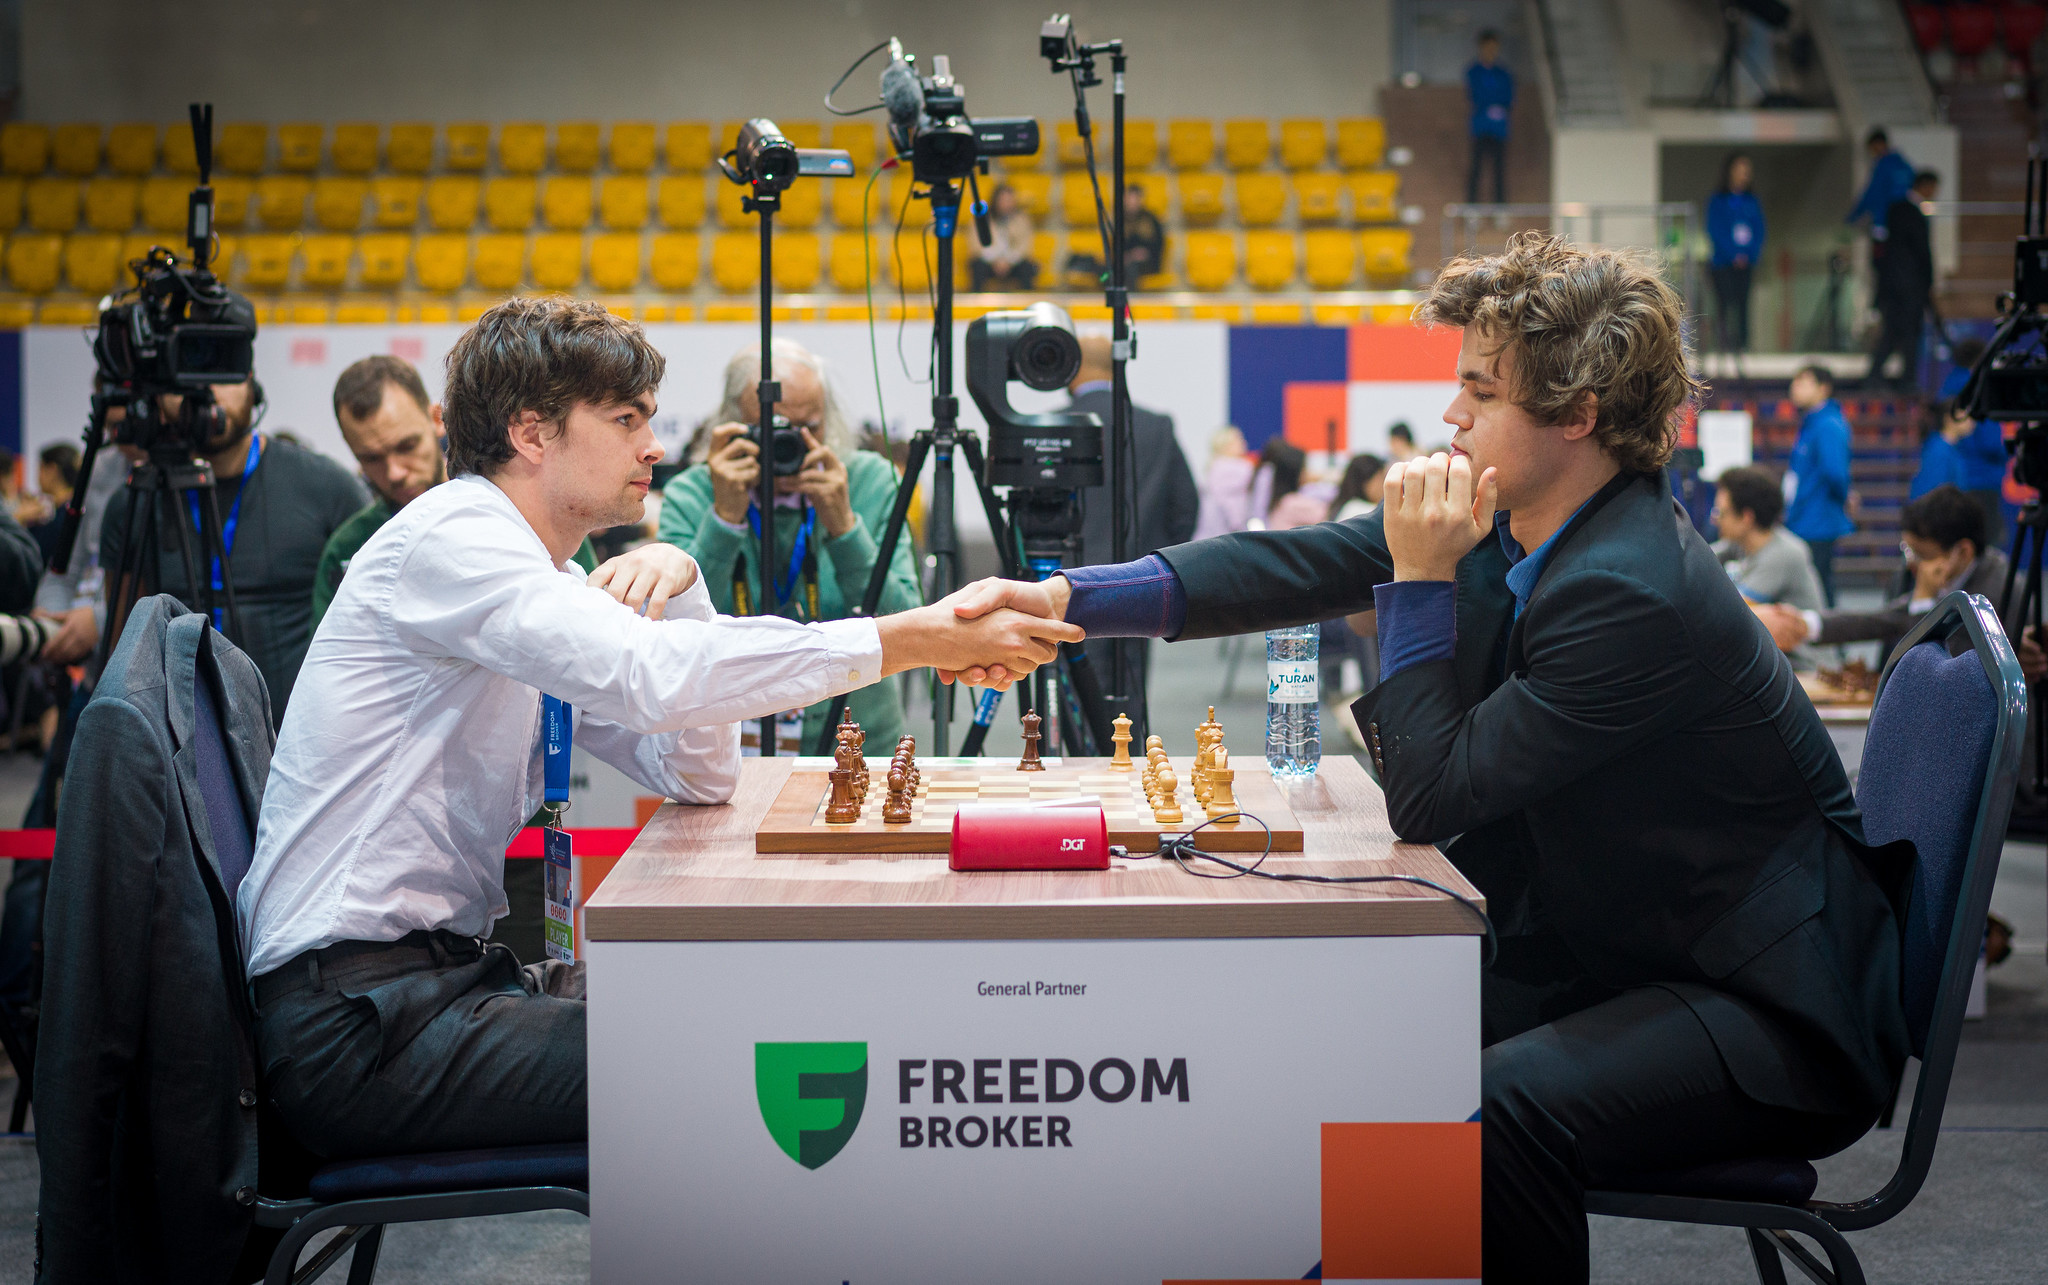 Artemiev Scores At Mind Games, 2nd Behind Carlsen In Blitz 